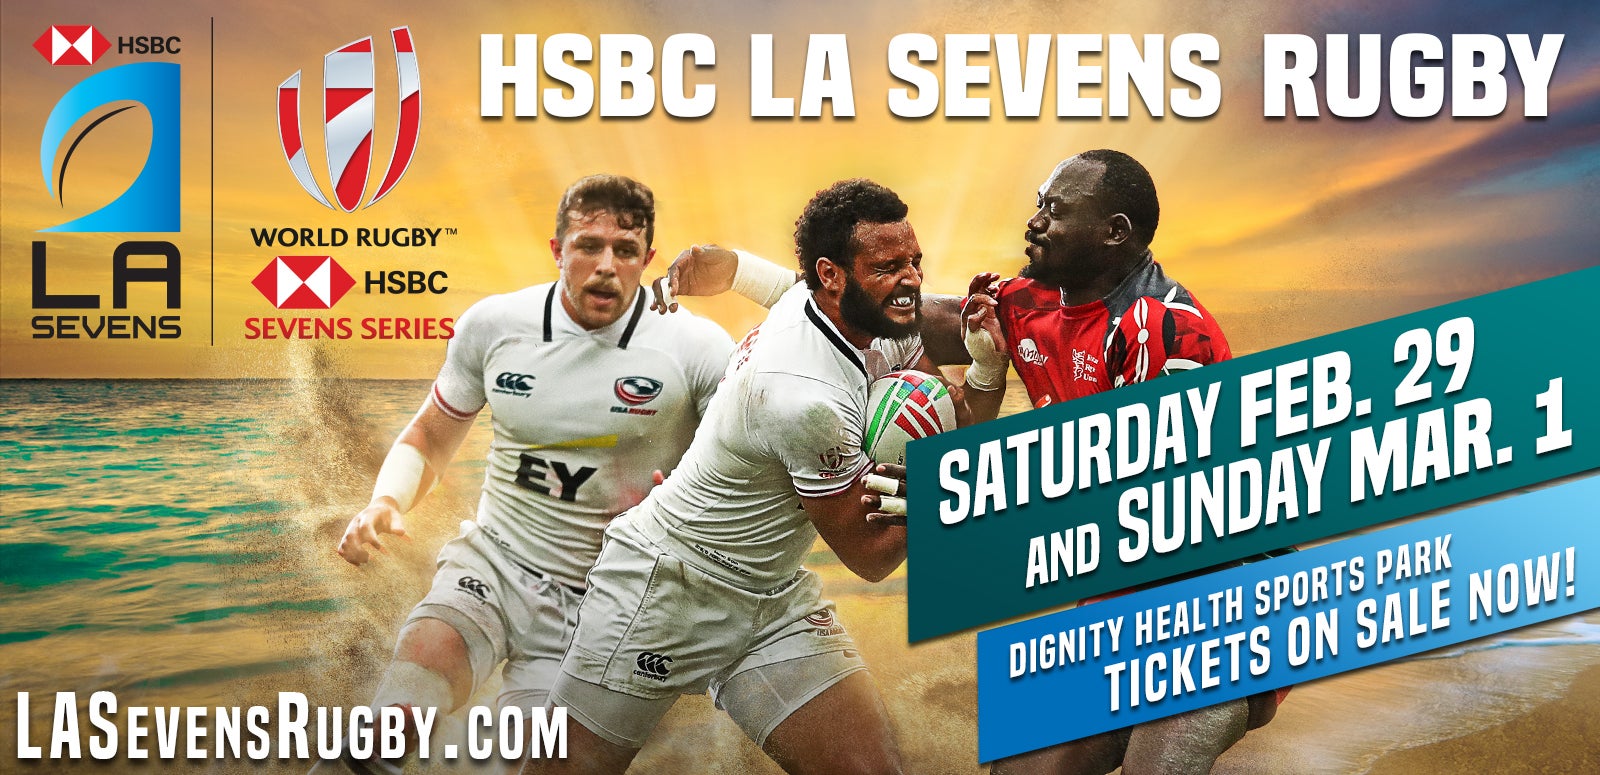  HSBC World Rugby Sevens Series – ROUND 5 USA